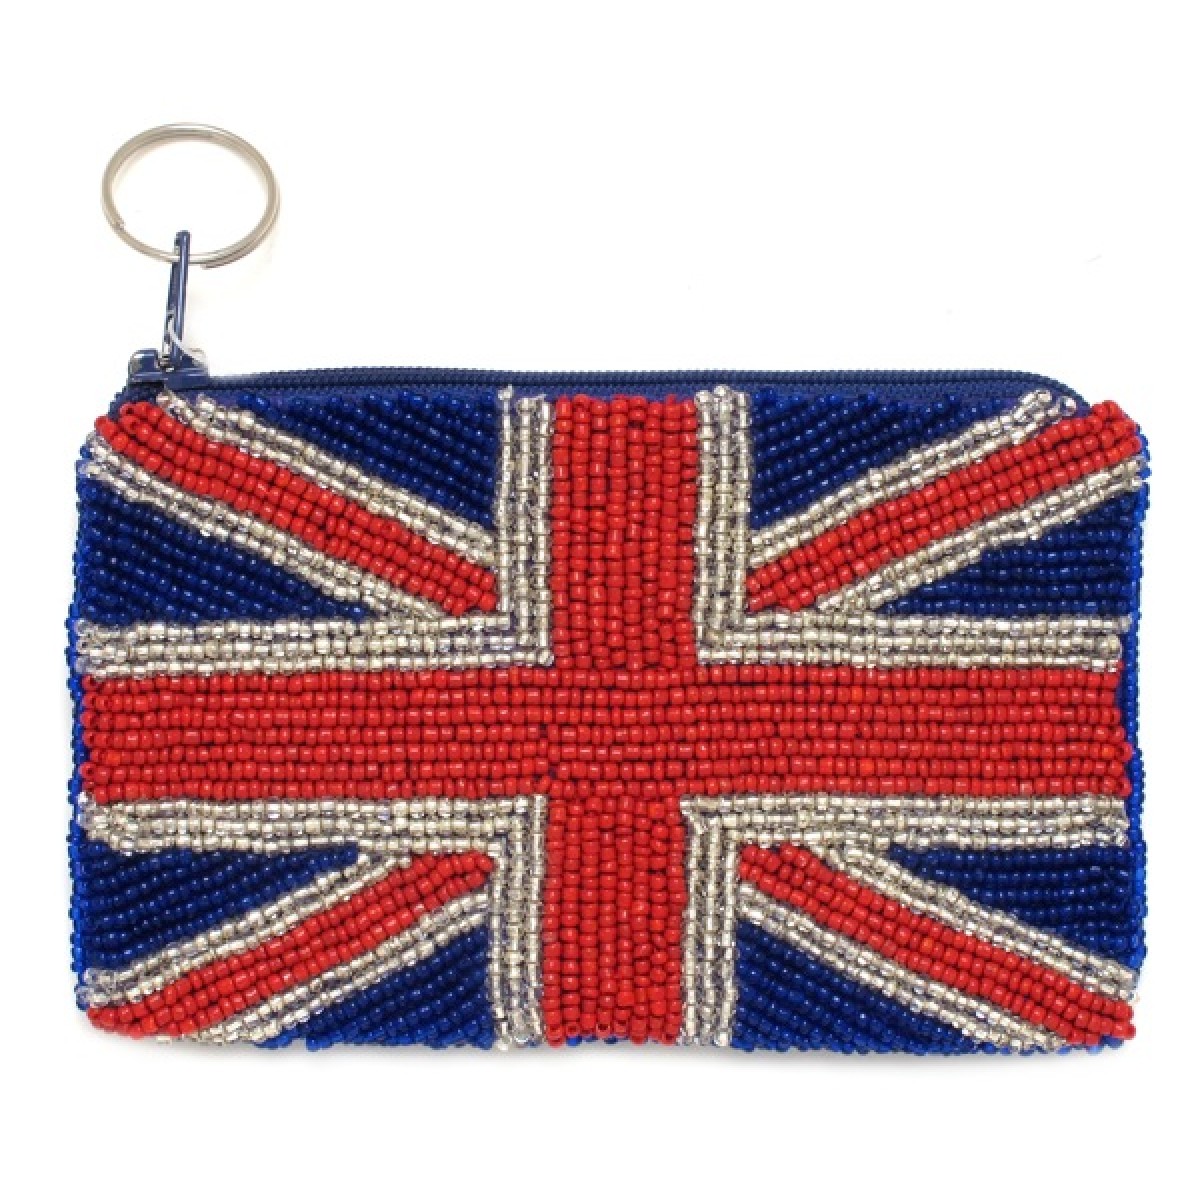 UK Flag Bag